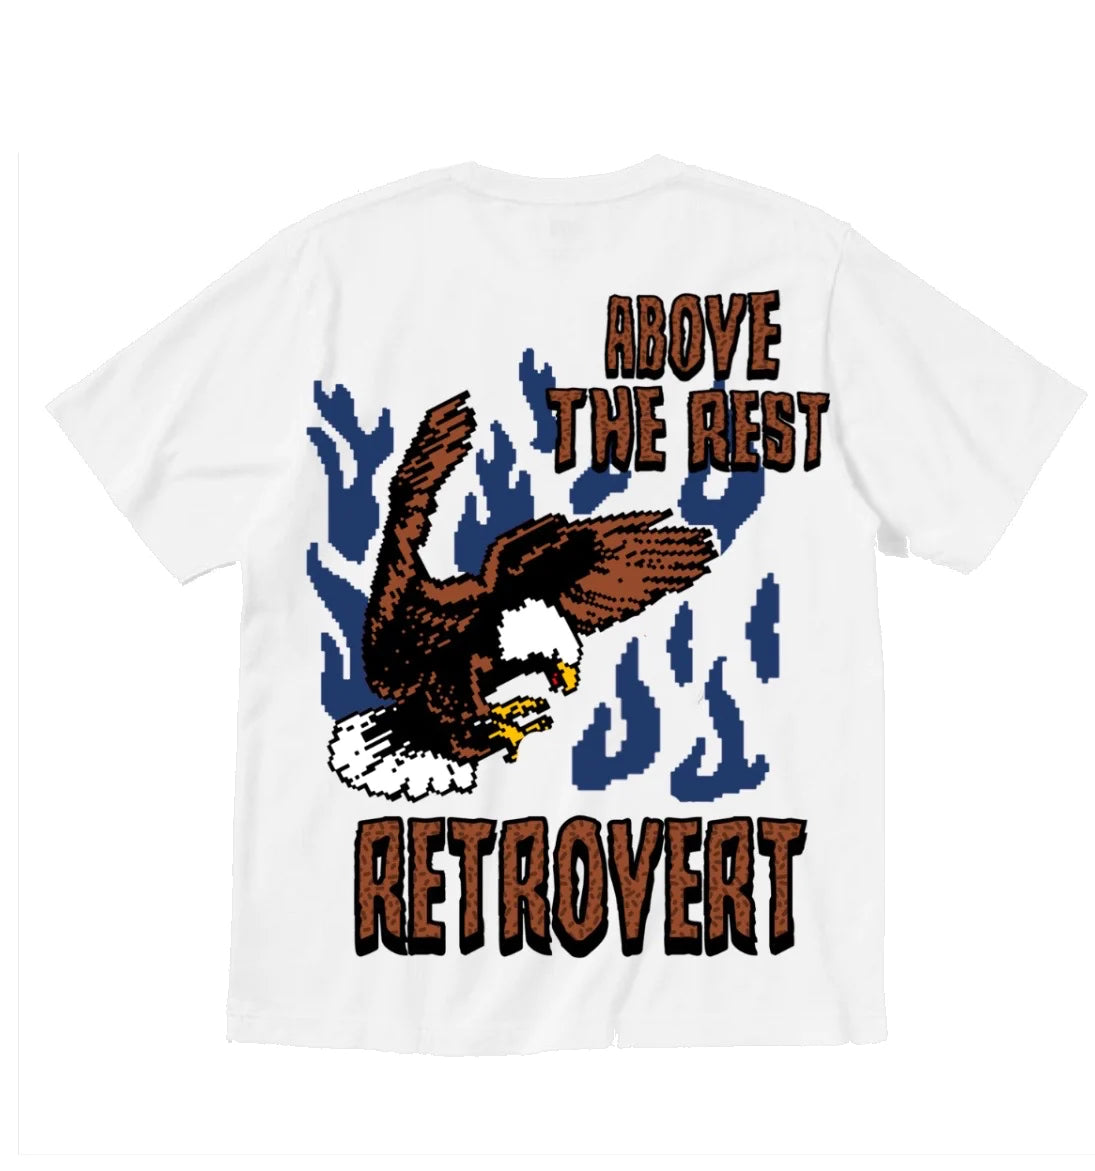 Retrovert NAVY & White BIRD TEE